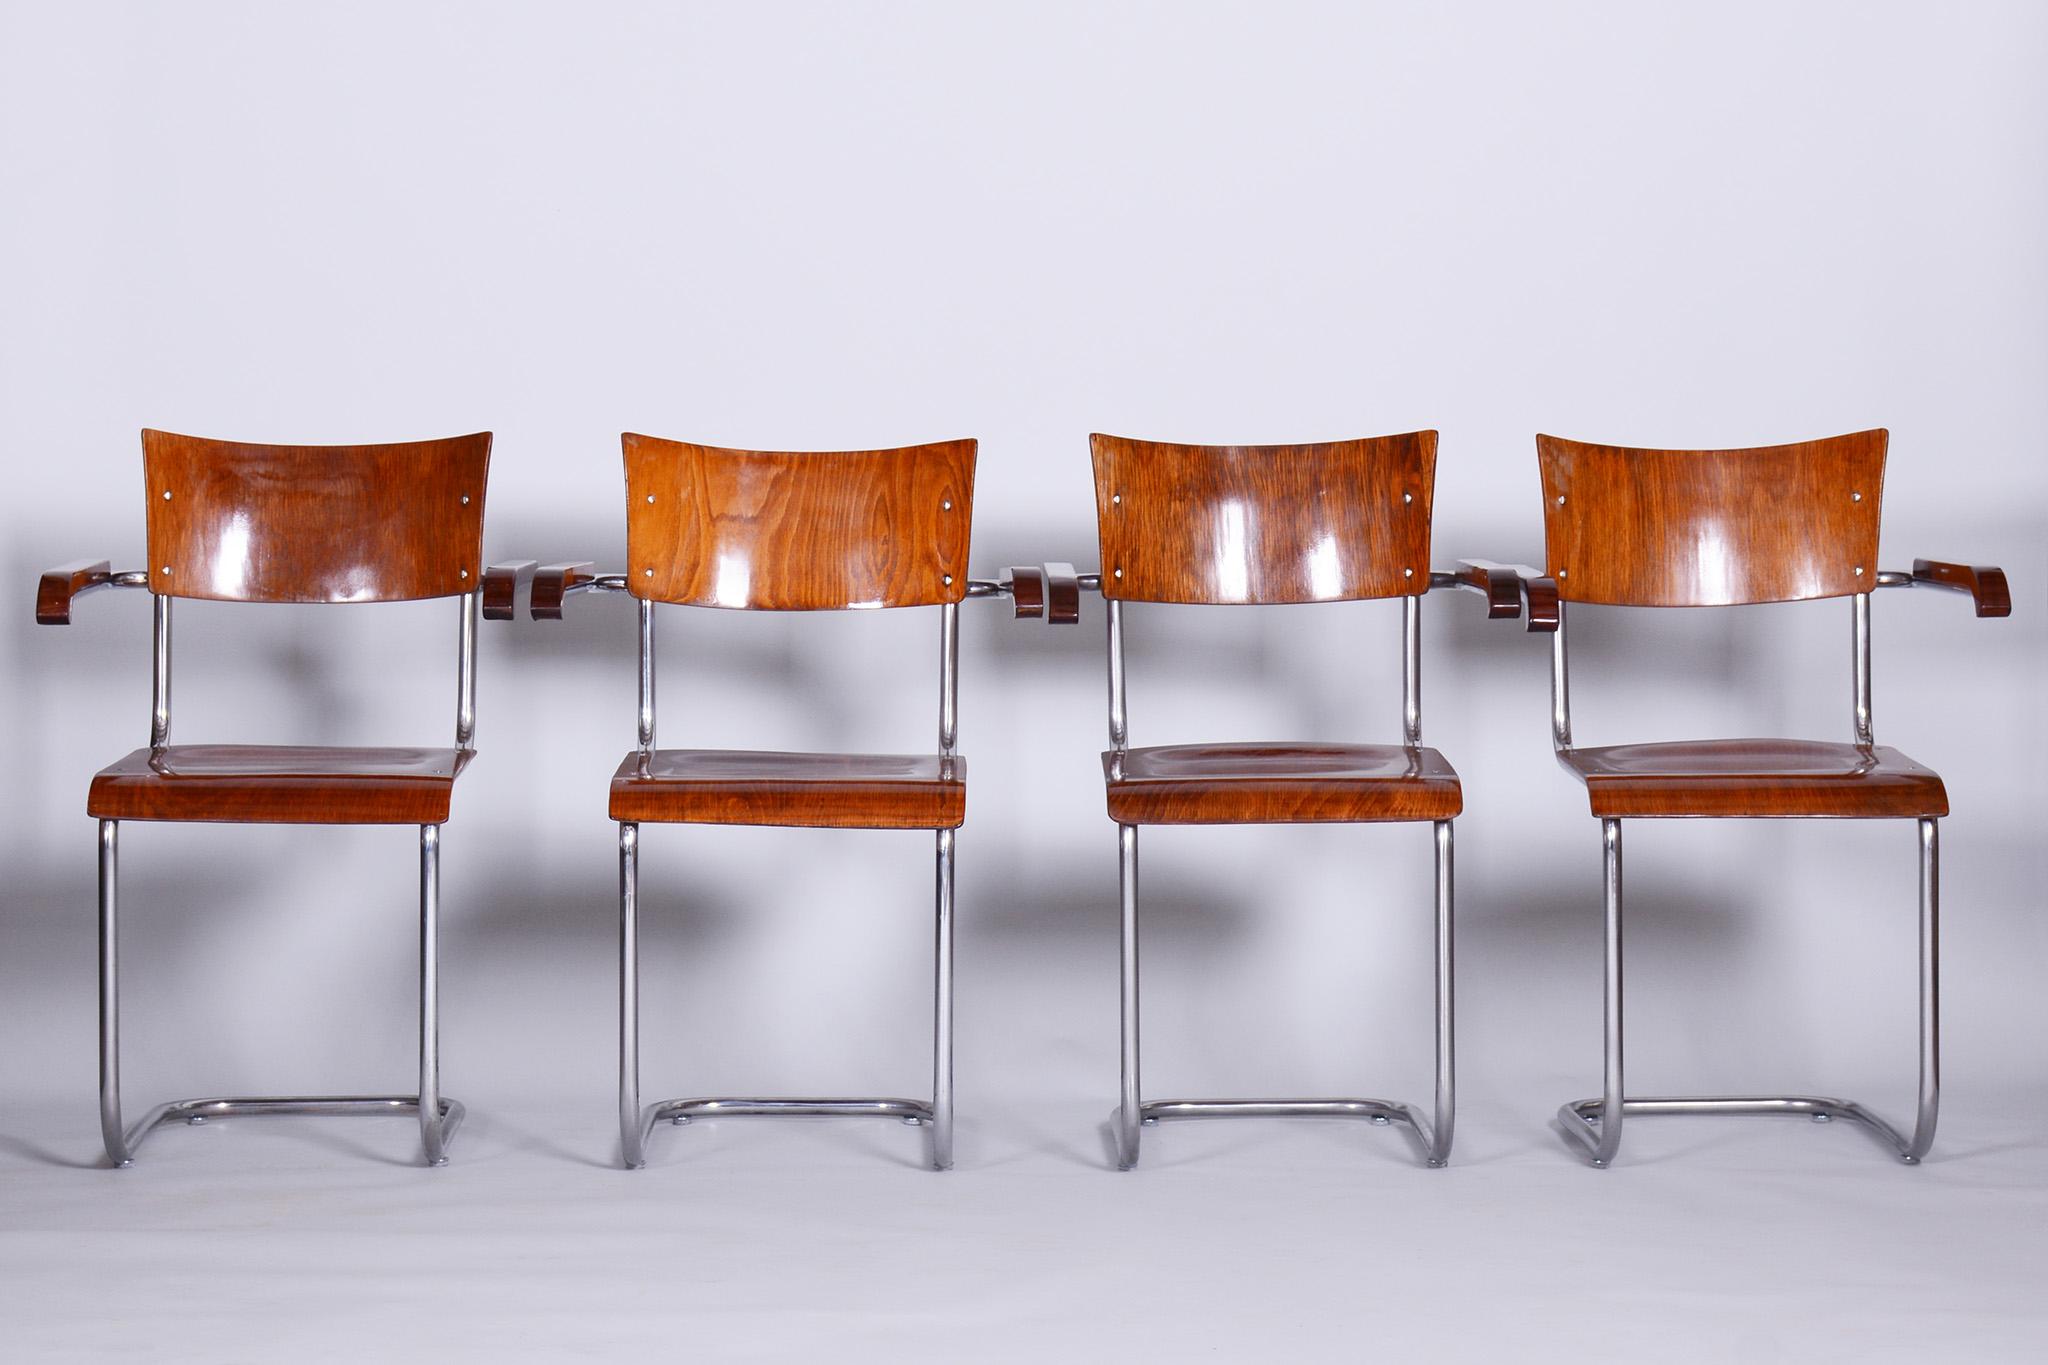 Set of 4 restored Bauhaus beech armchairs designed by Mart Stam.

Style: Bauhaus
Designer: Mart Stam
Maker: Robert Slezak
Period: 1930-1939
Source: Czechia

Material: Beech and chrome-plated steel
Measures: Seat height: 45 cm /